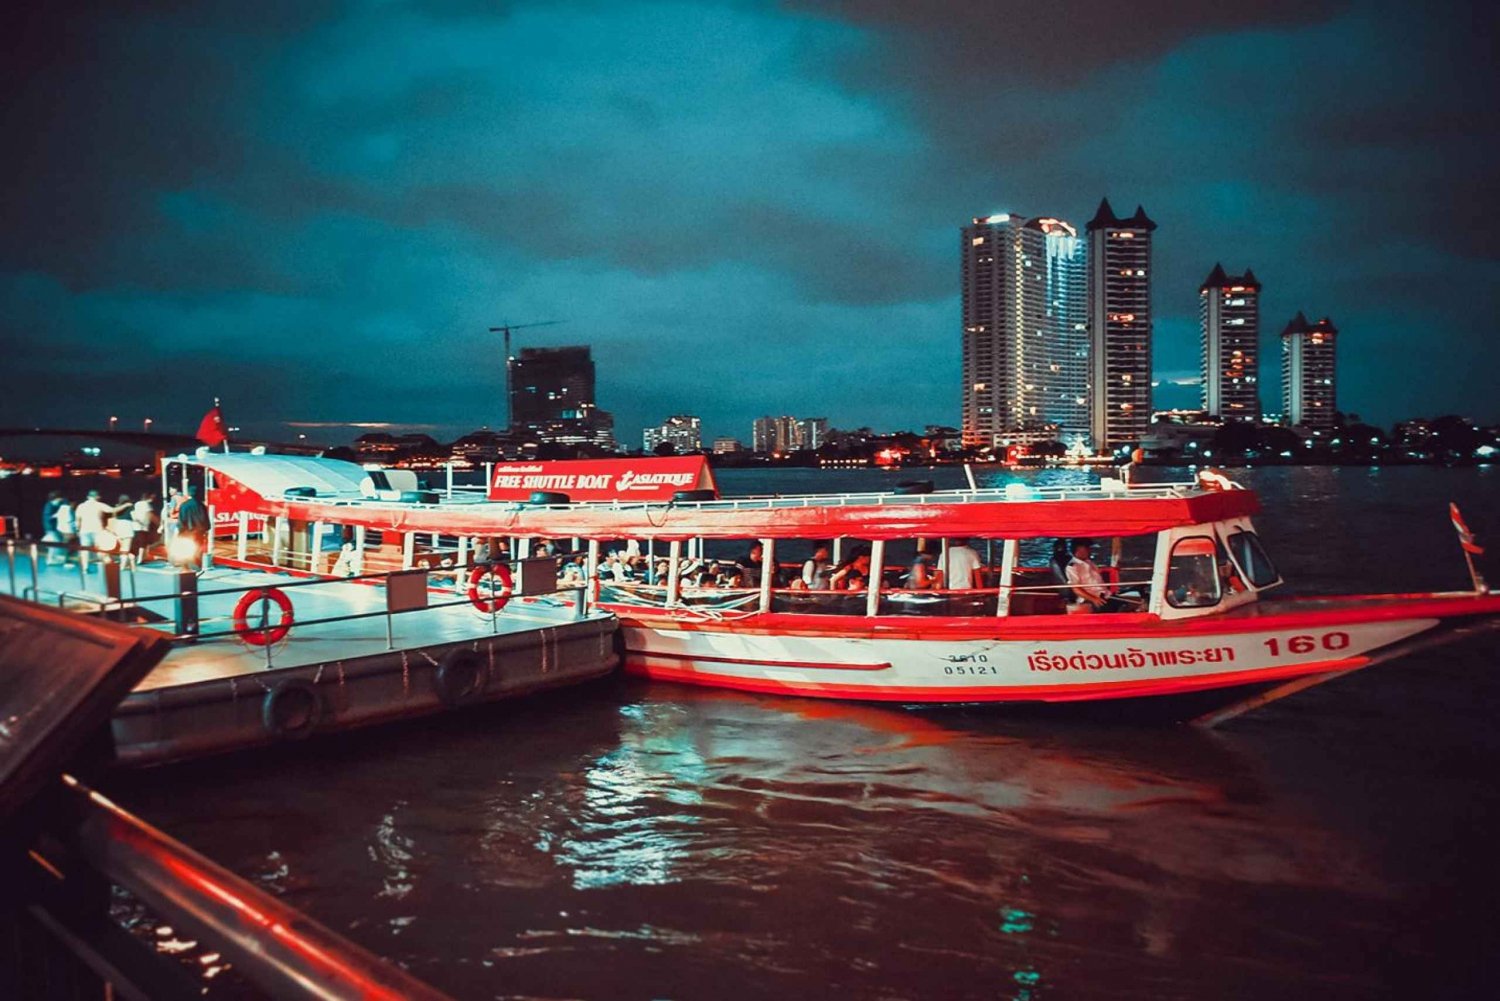 Bangkokissa: Calypso Cabaret & Dinner Cruise ja hotellin kuljetus.